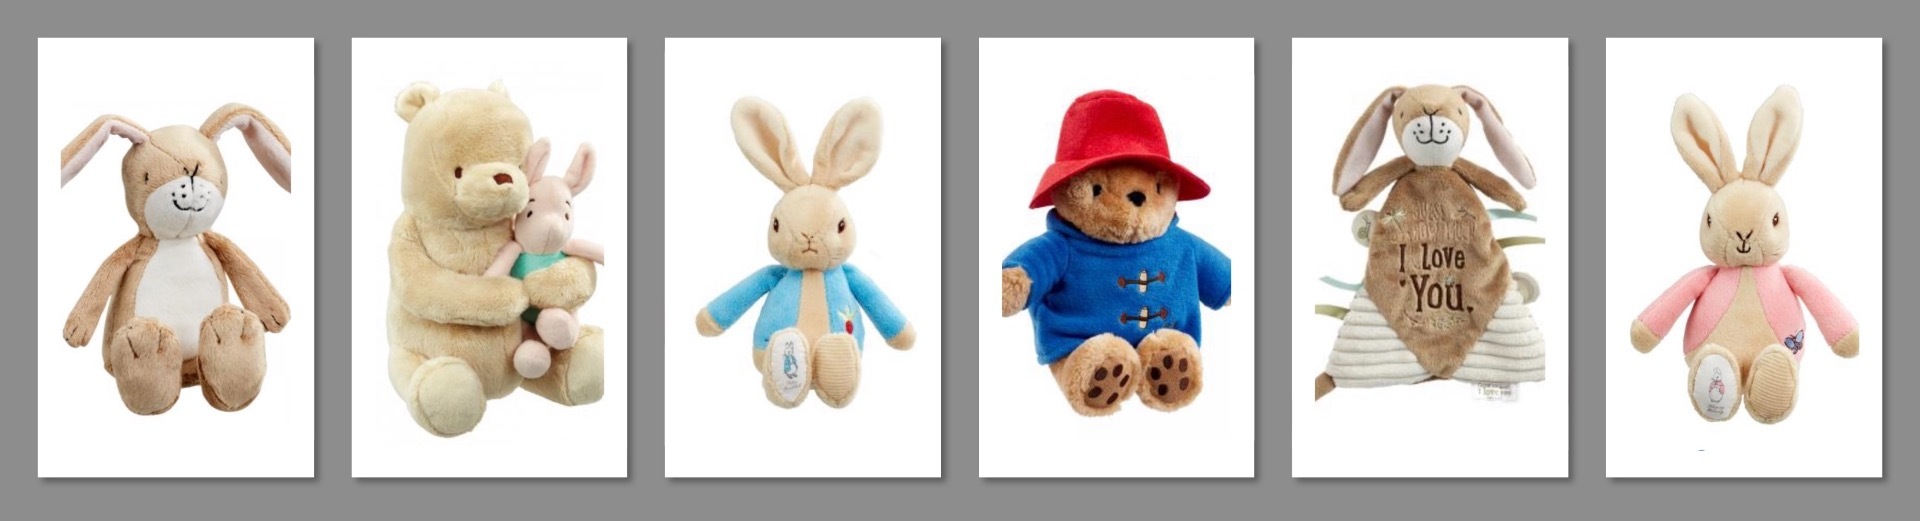 NEW Winnie the Pooh Peter Rabbit Paddington Toys